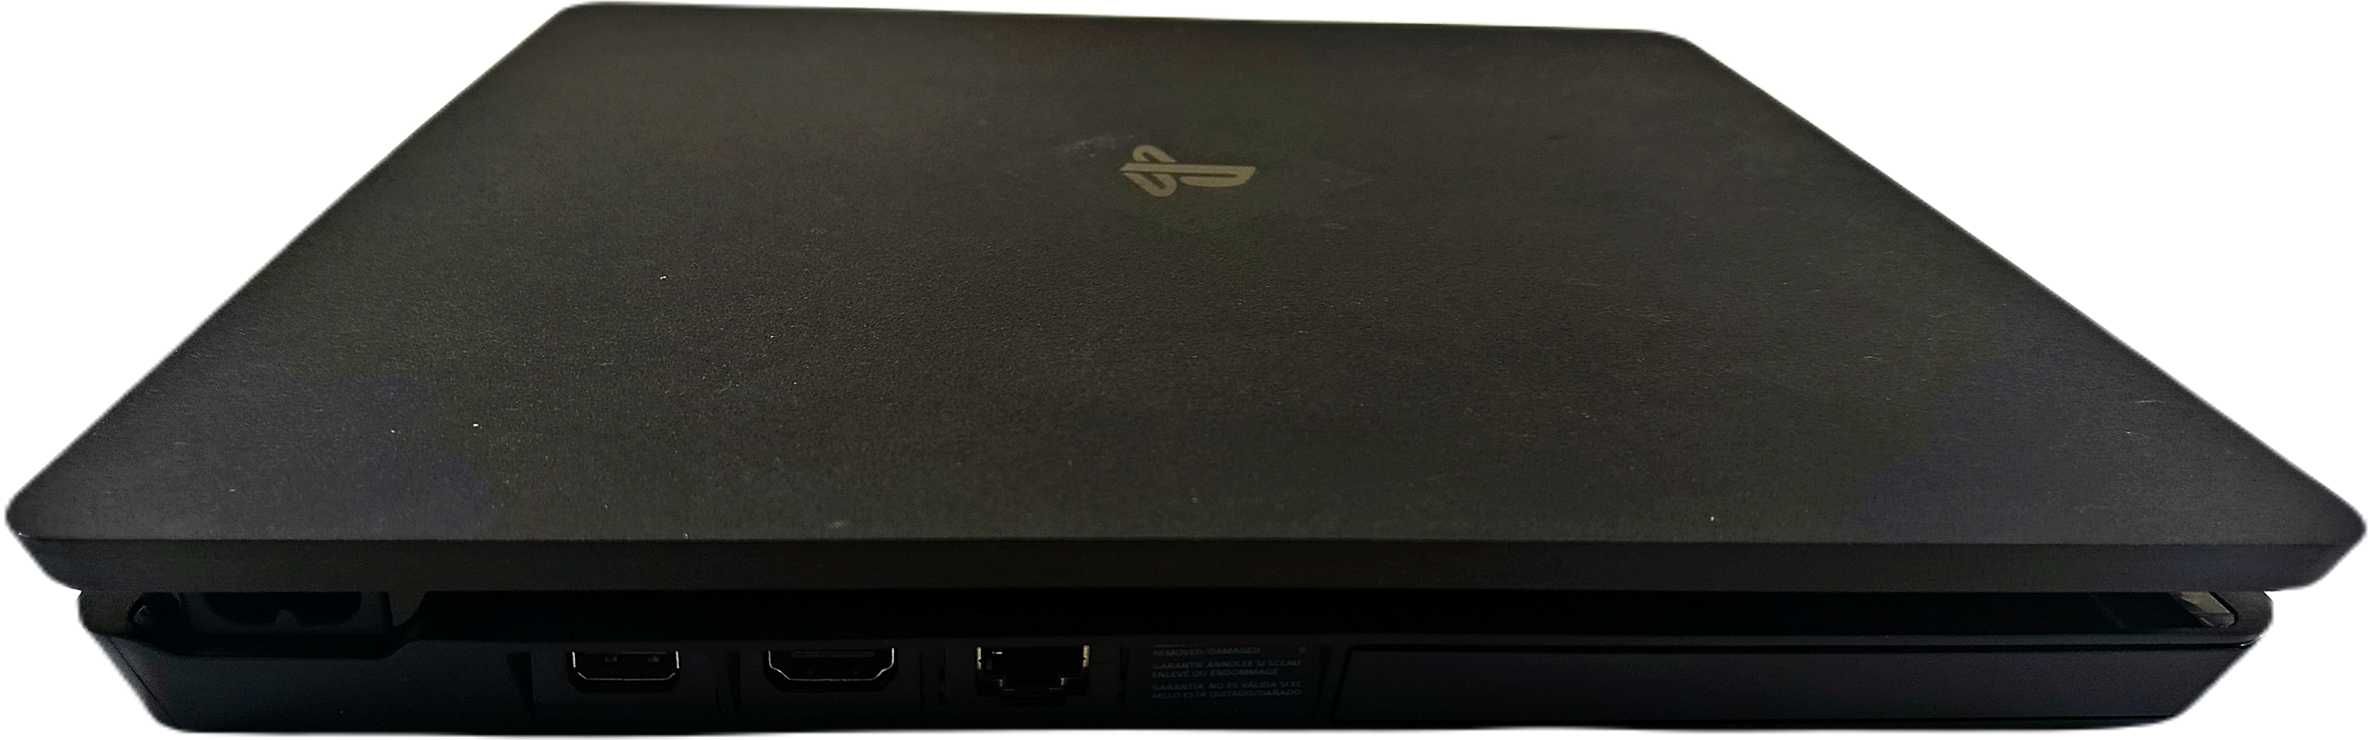 Konsola Sony Playstation 4 Slim 1 TB